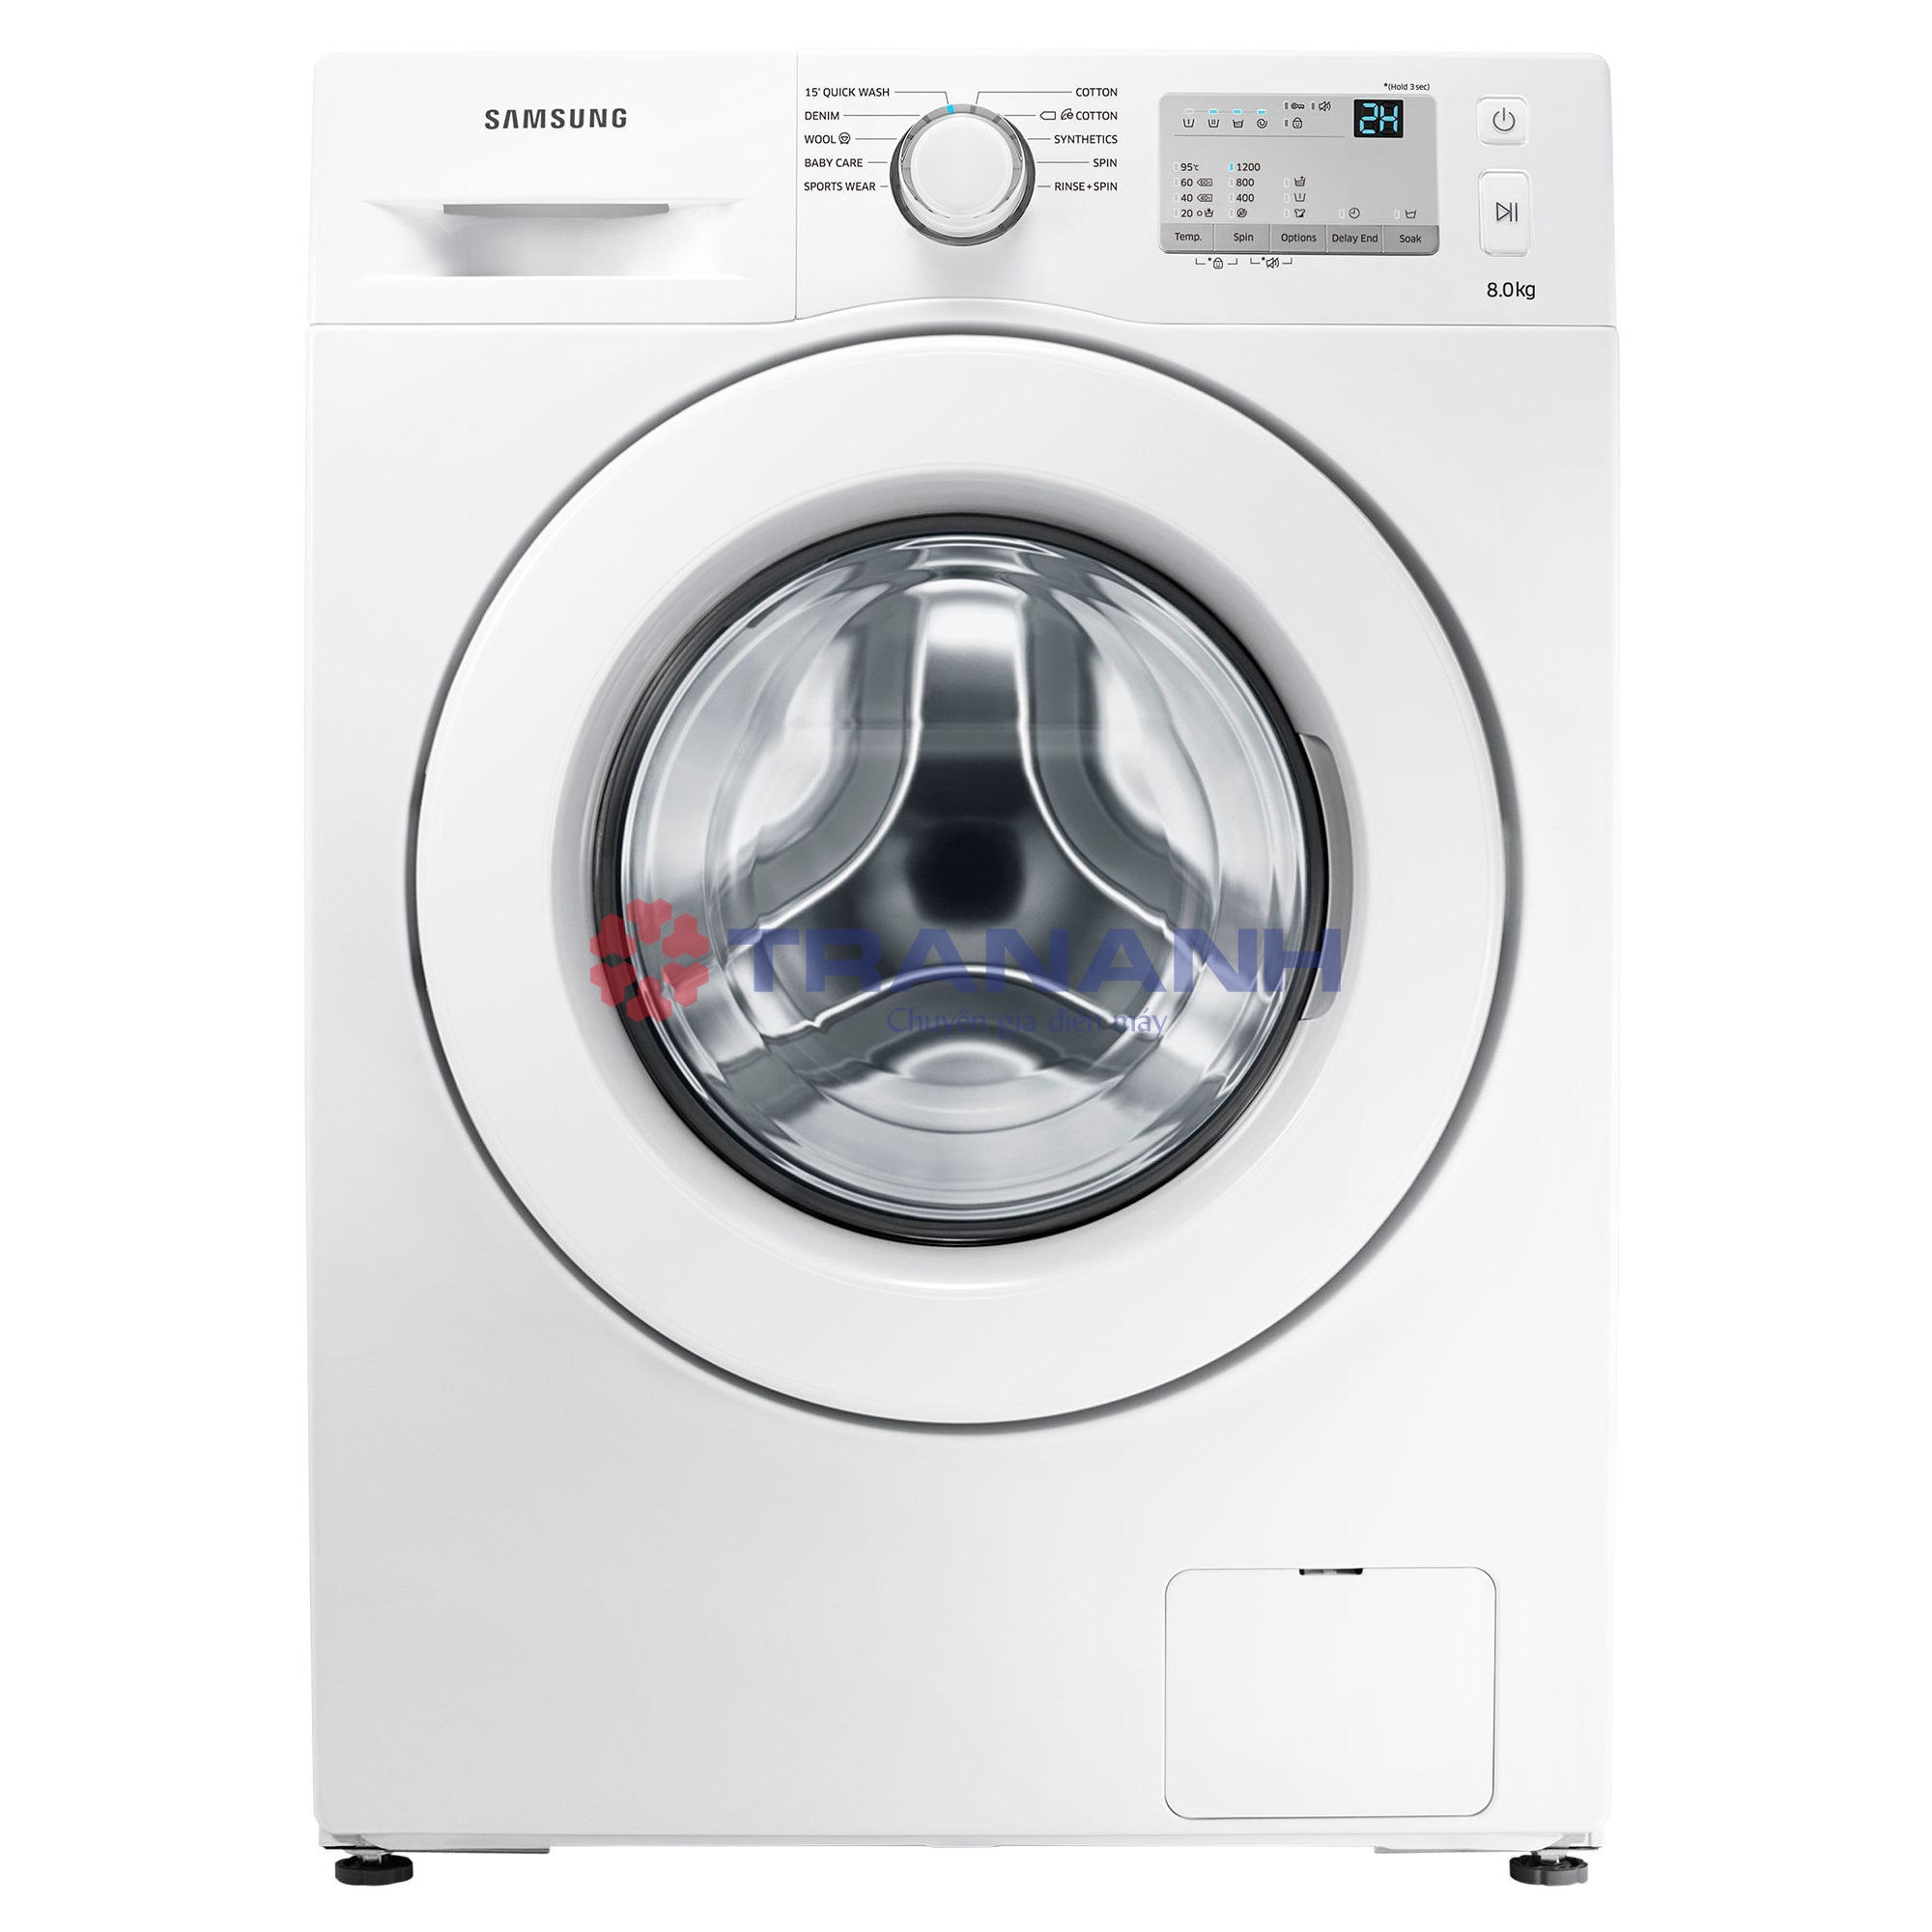 Máy giặt Samsung 8 kg WW80J3283KW/SV